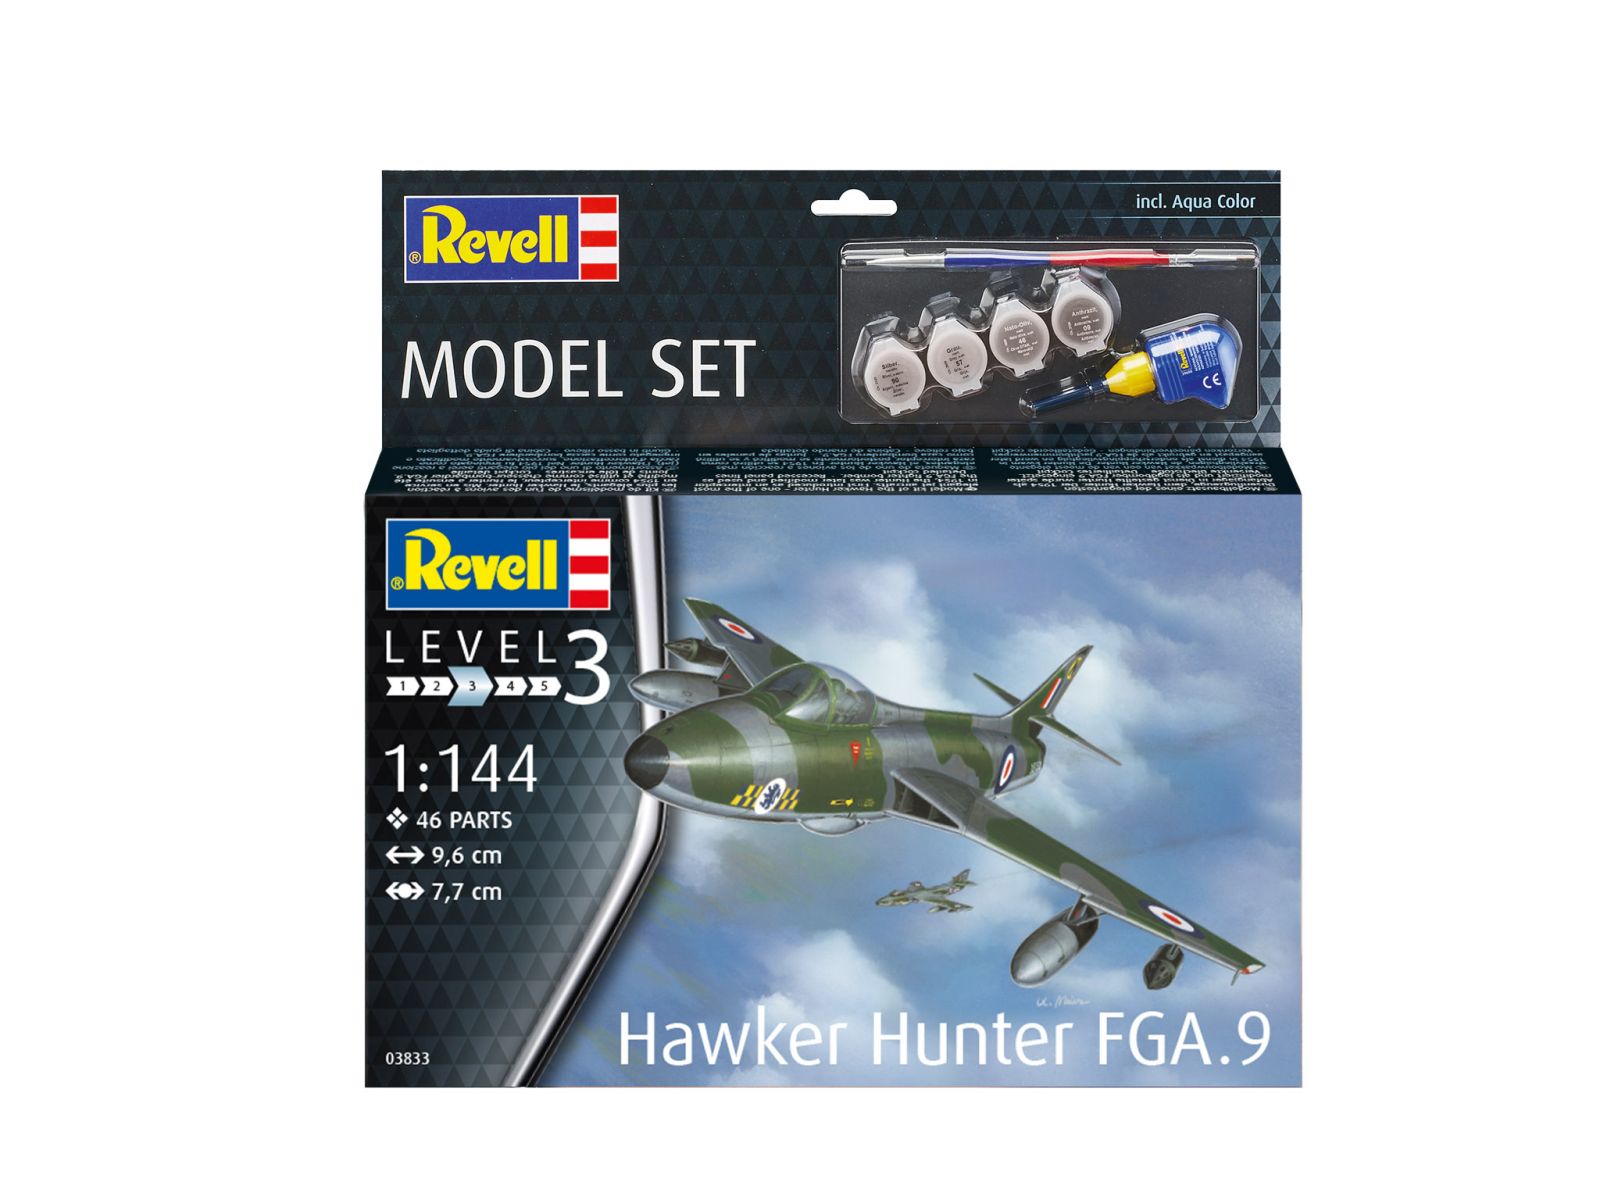 Revell 63833 - Model Set Hawker Hunter FGA.9